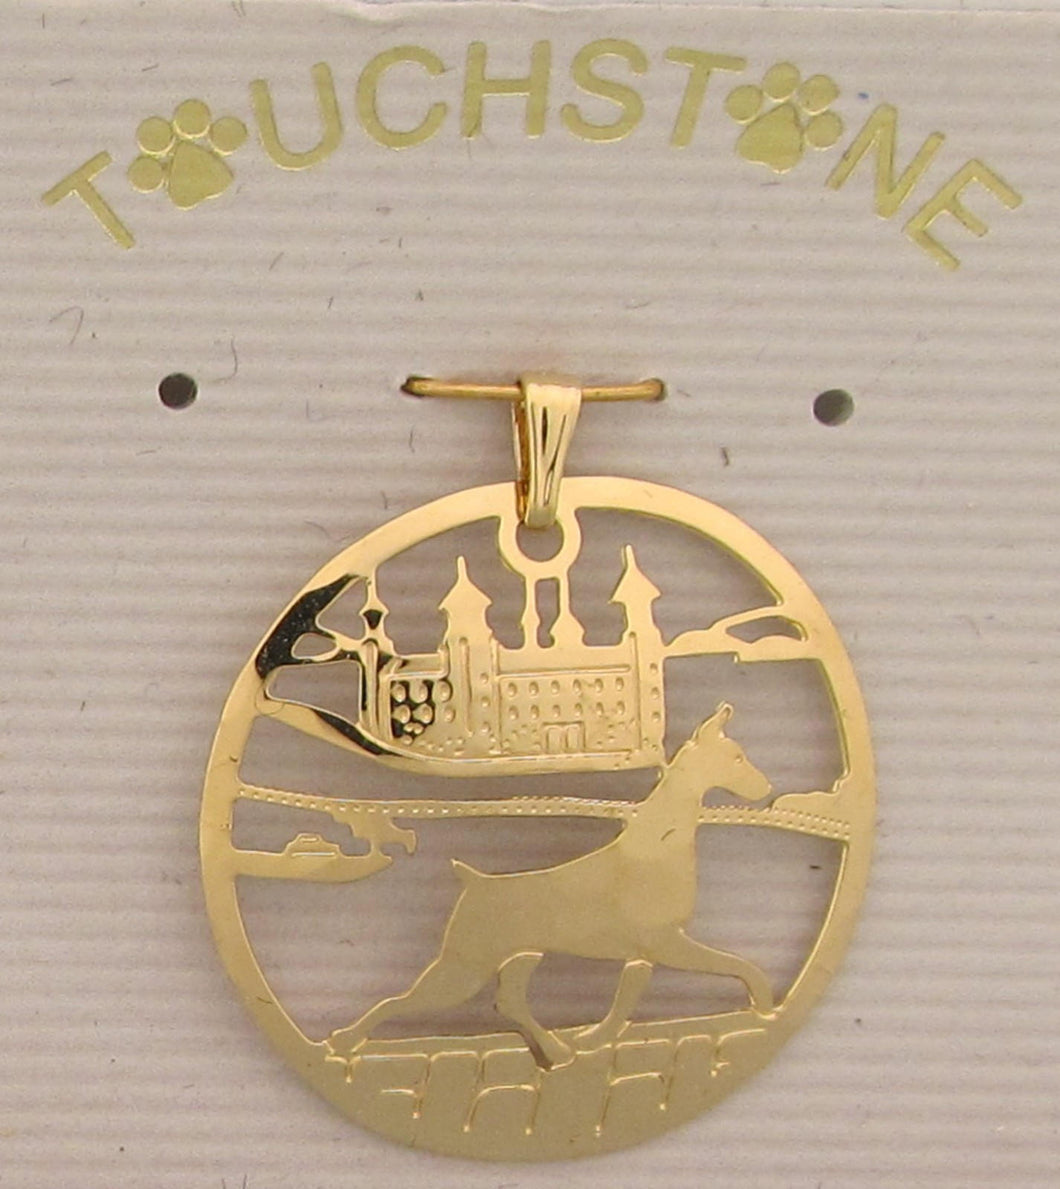 Doberman Pinscher Scene Pendant by Touchstone Dog Designs // Doberman Pinscher Jewelry / Dog Breed Jewelry // AKC Breed Jewelry